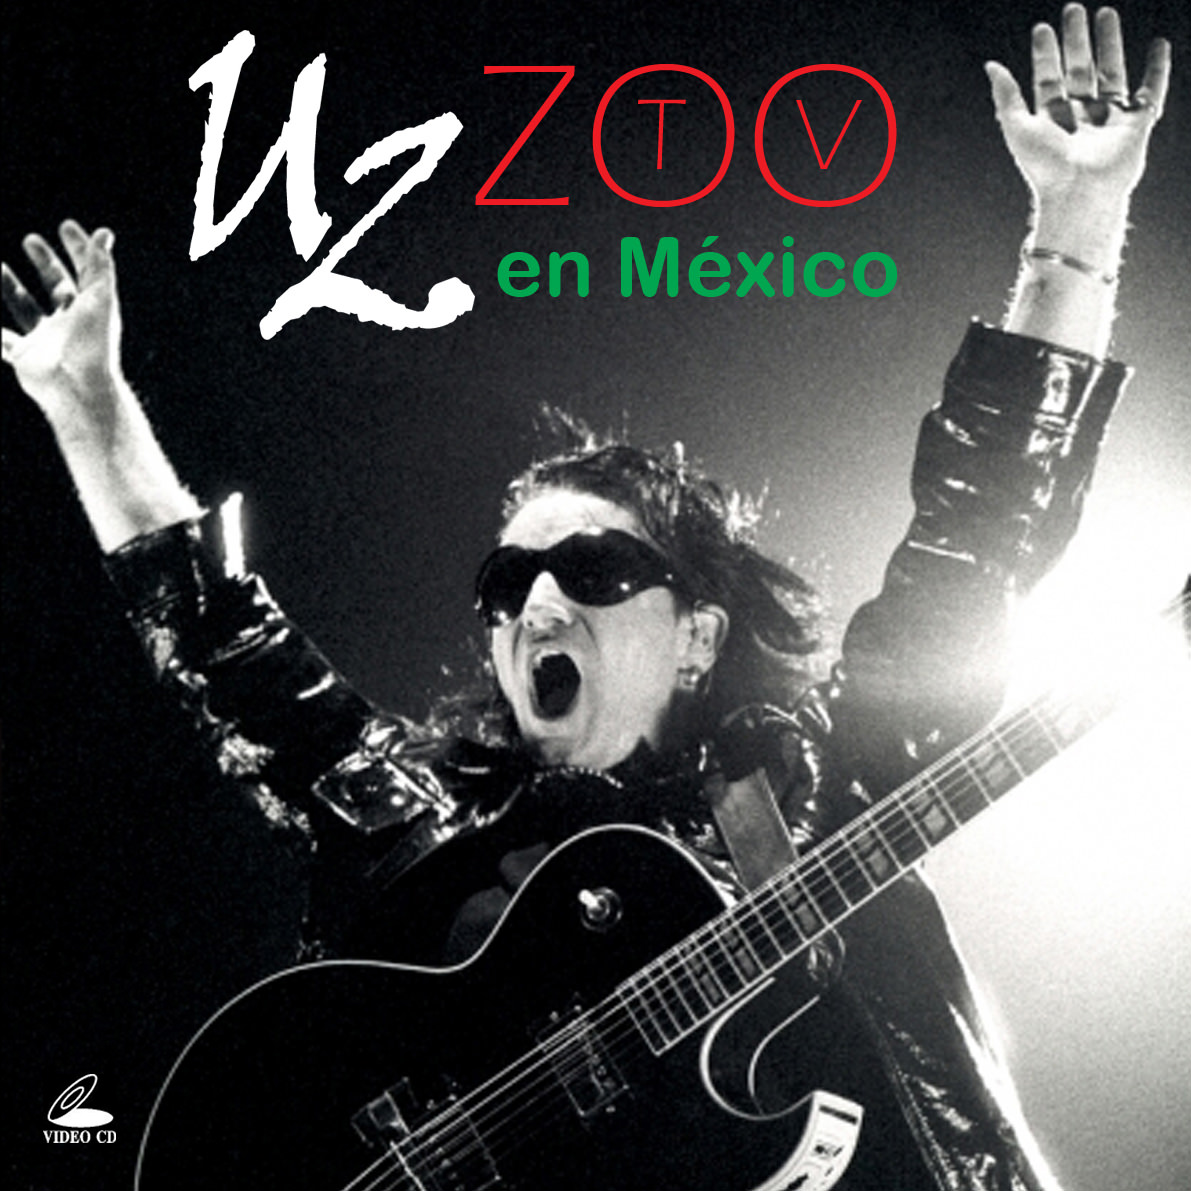 u2 zoo tv tour mexico